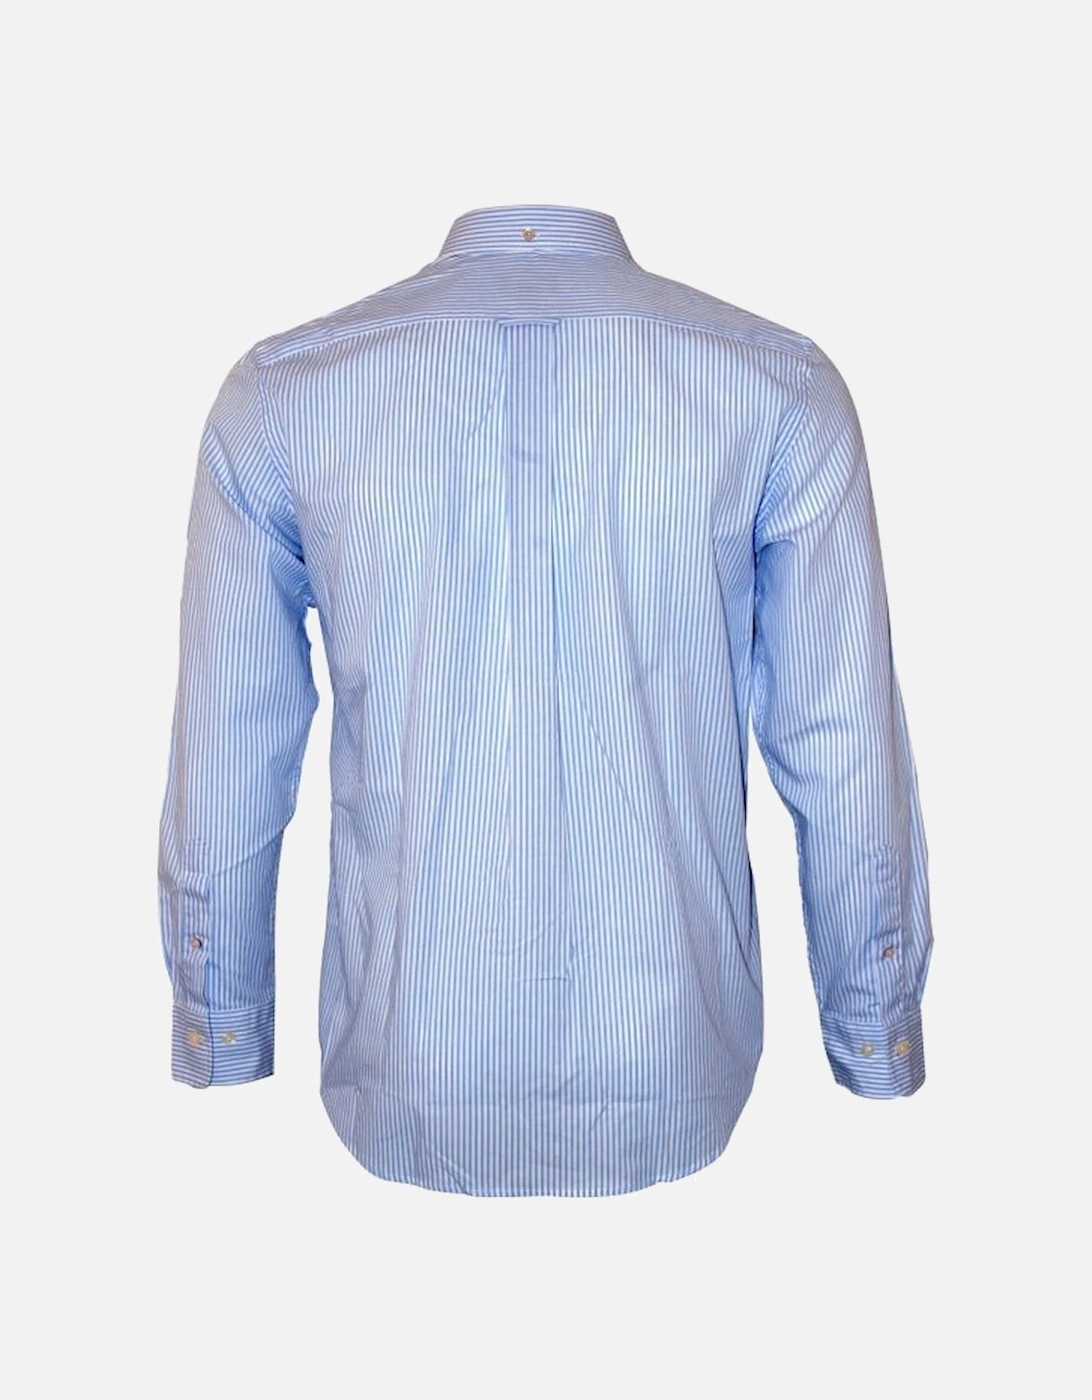 Regular Fit Broadcloth Banker Stripe Shirt, Capri Blue